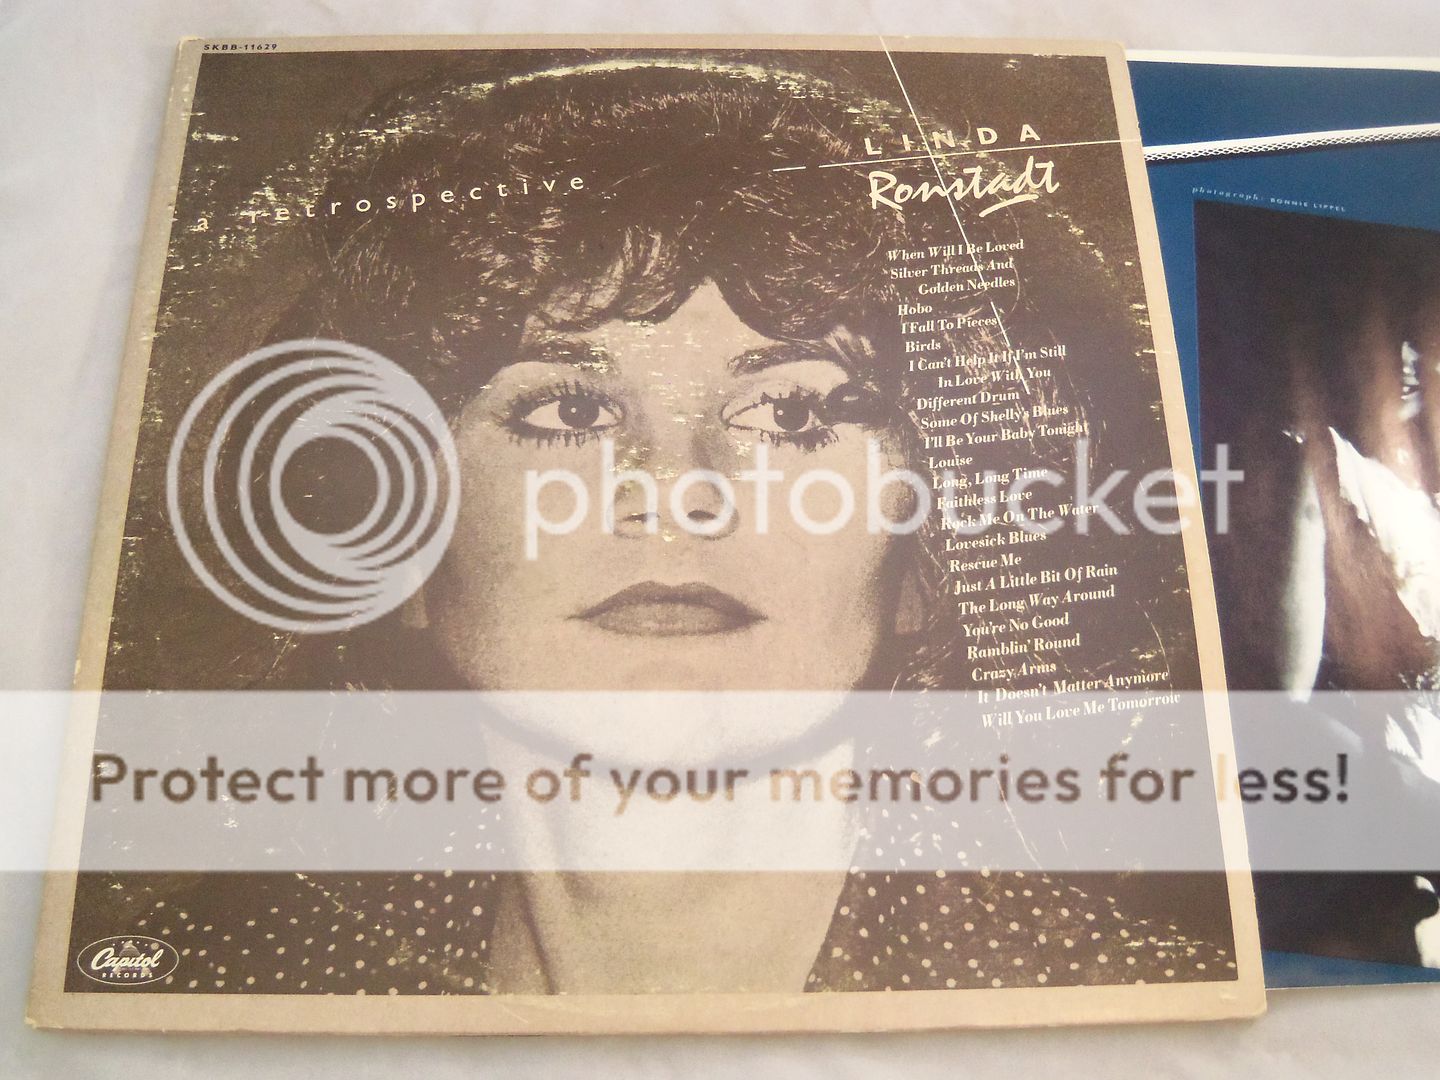 Linda Ronstadt A Retrospective Records, LPs, Vinyl and CDs - MusicStack